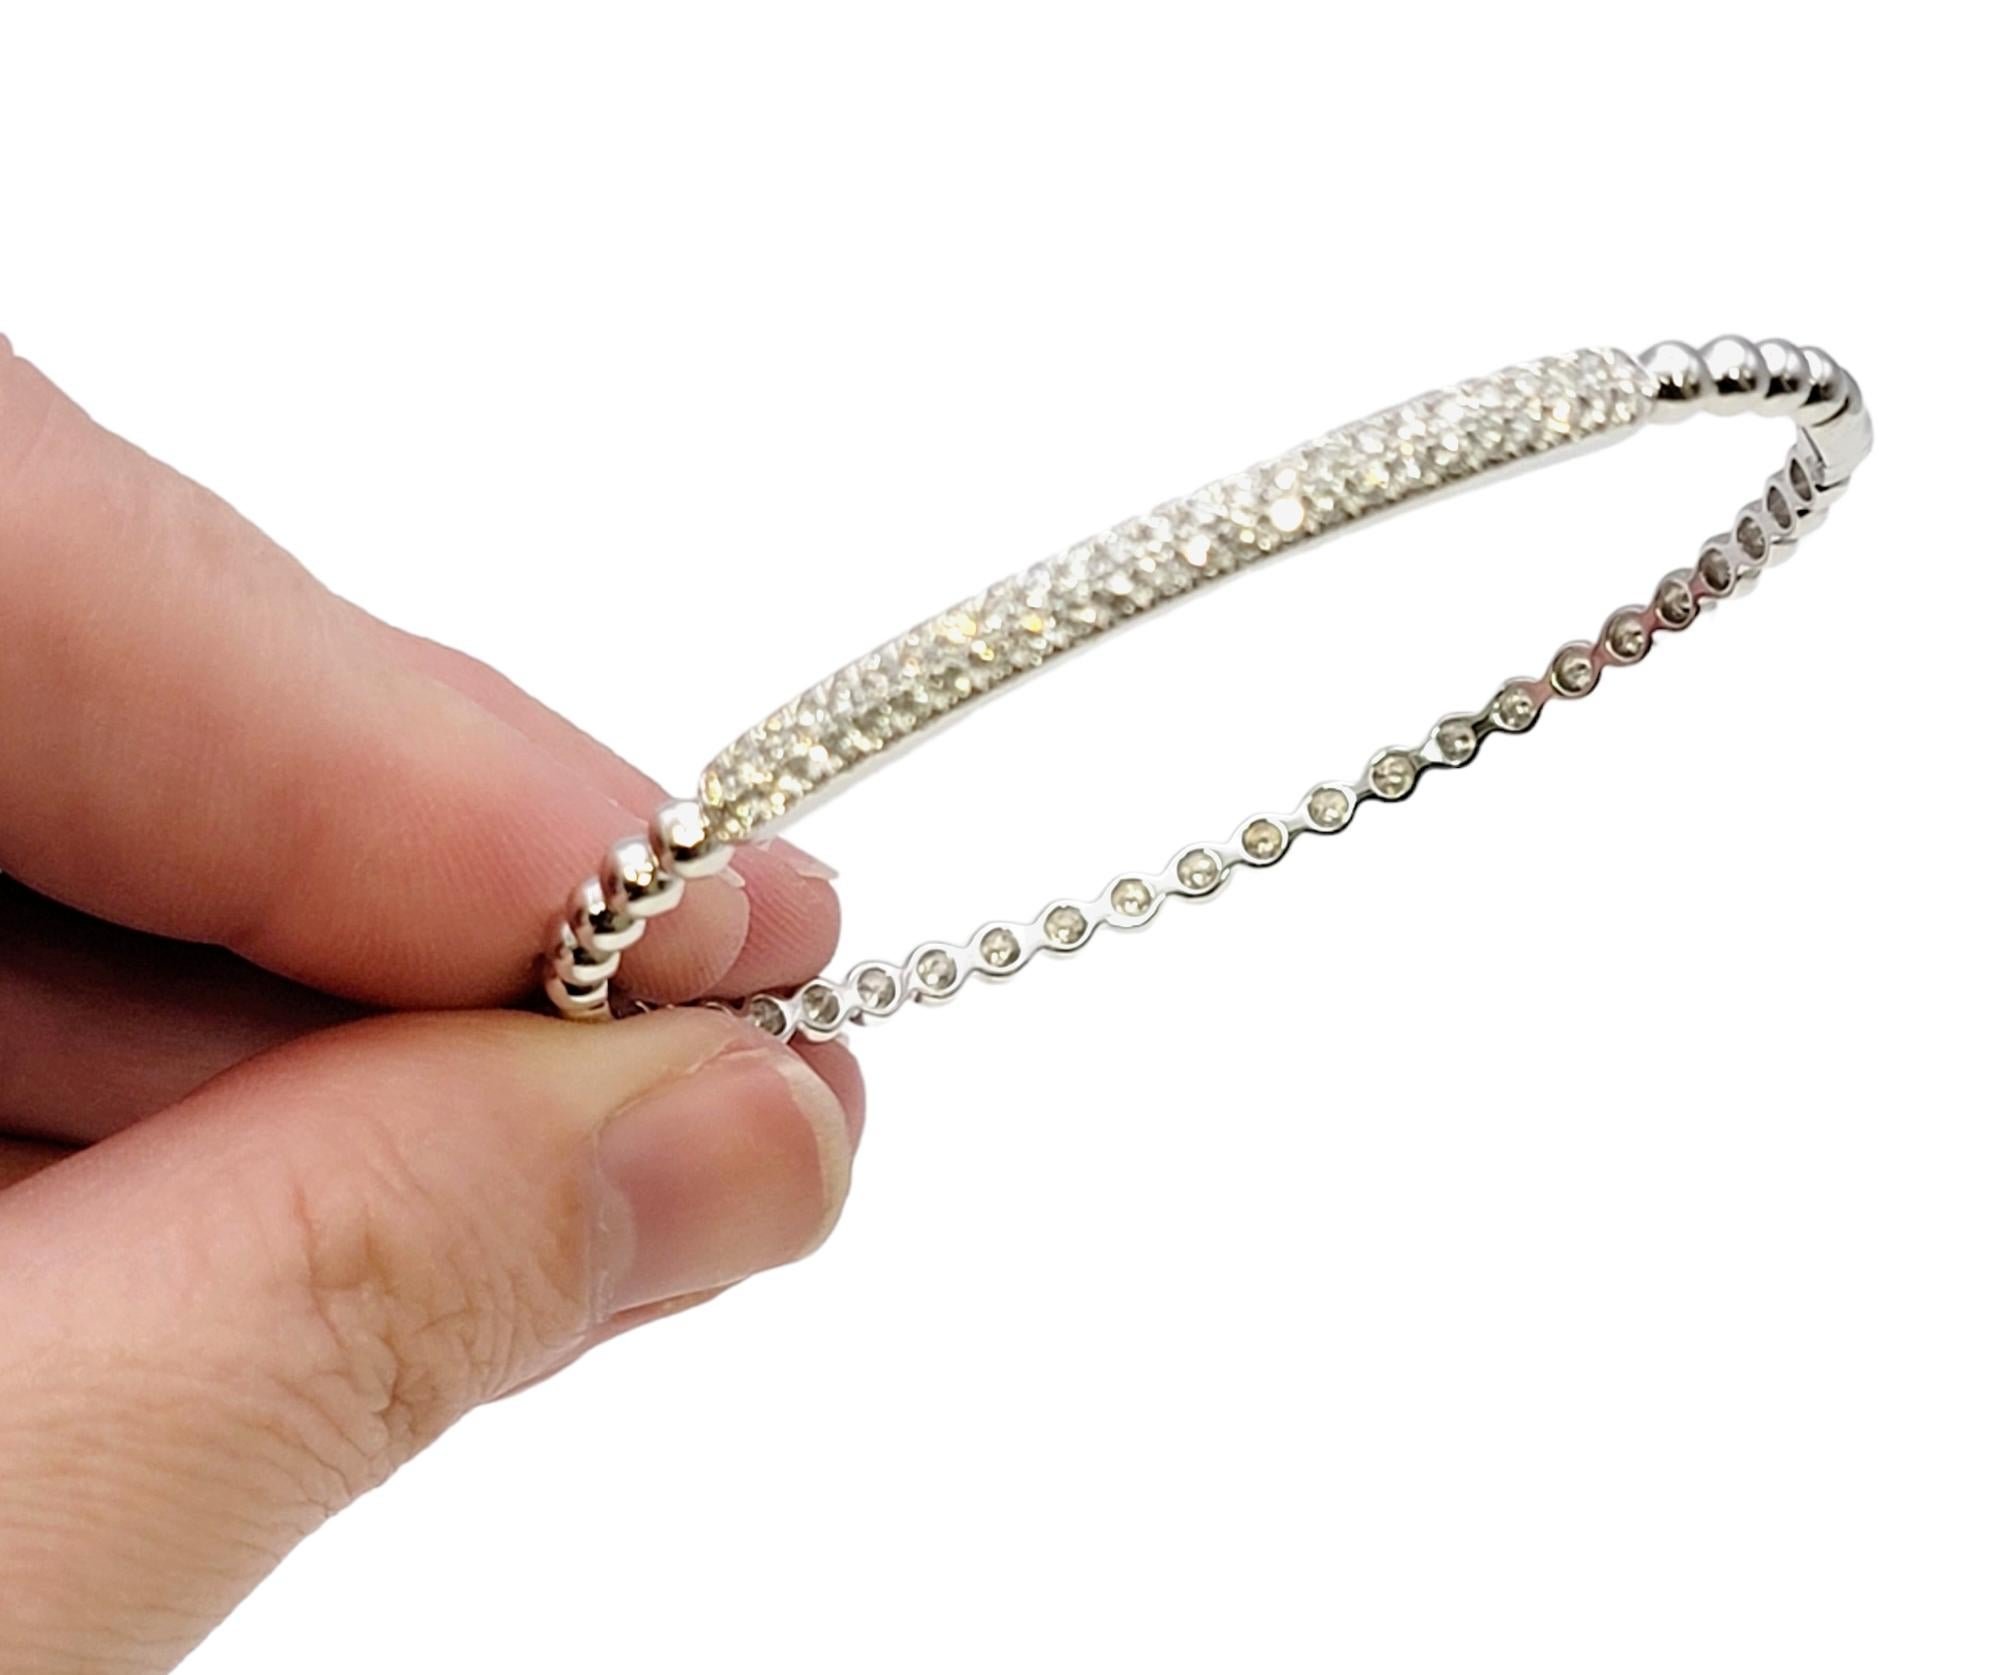  14 Karat White Gold Bubble Style Narrow Stacking Bangle Bracelet with Diamonds For Sale 1